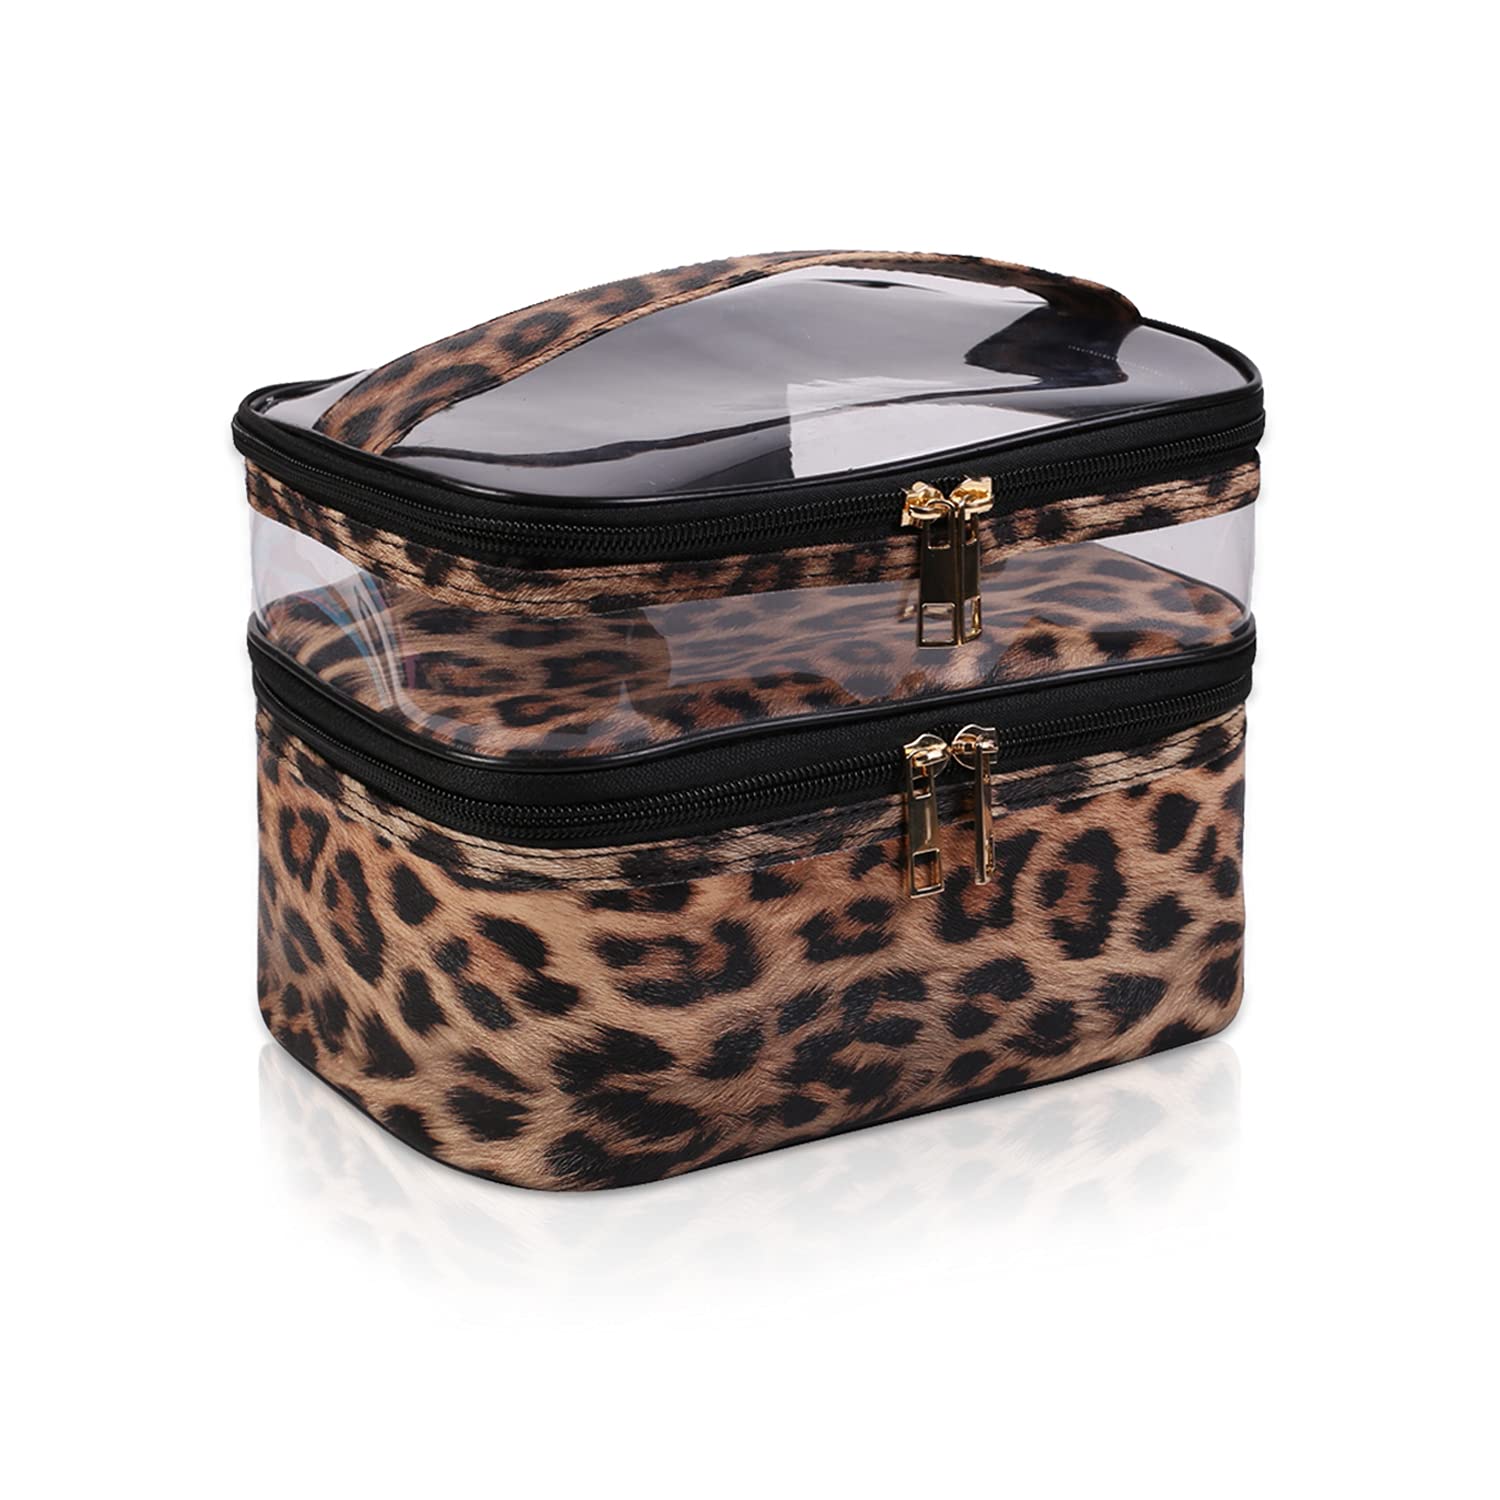 imerelez Double-layer Cosmetic Bag Makeup Bag Travel Makeup Bag Makeup Bags for Women Cosmetics Cases Portable Waterproof Foldable (Leopard)